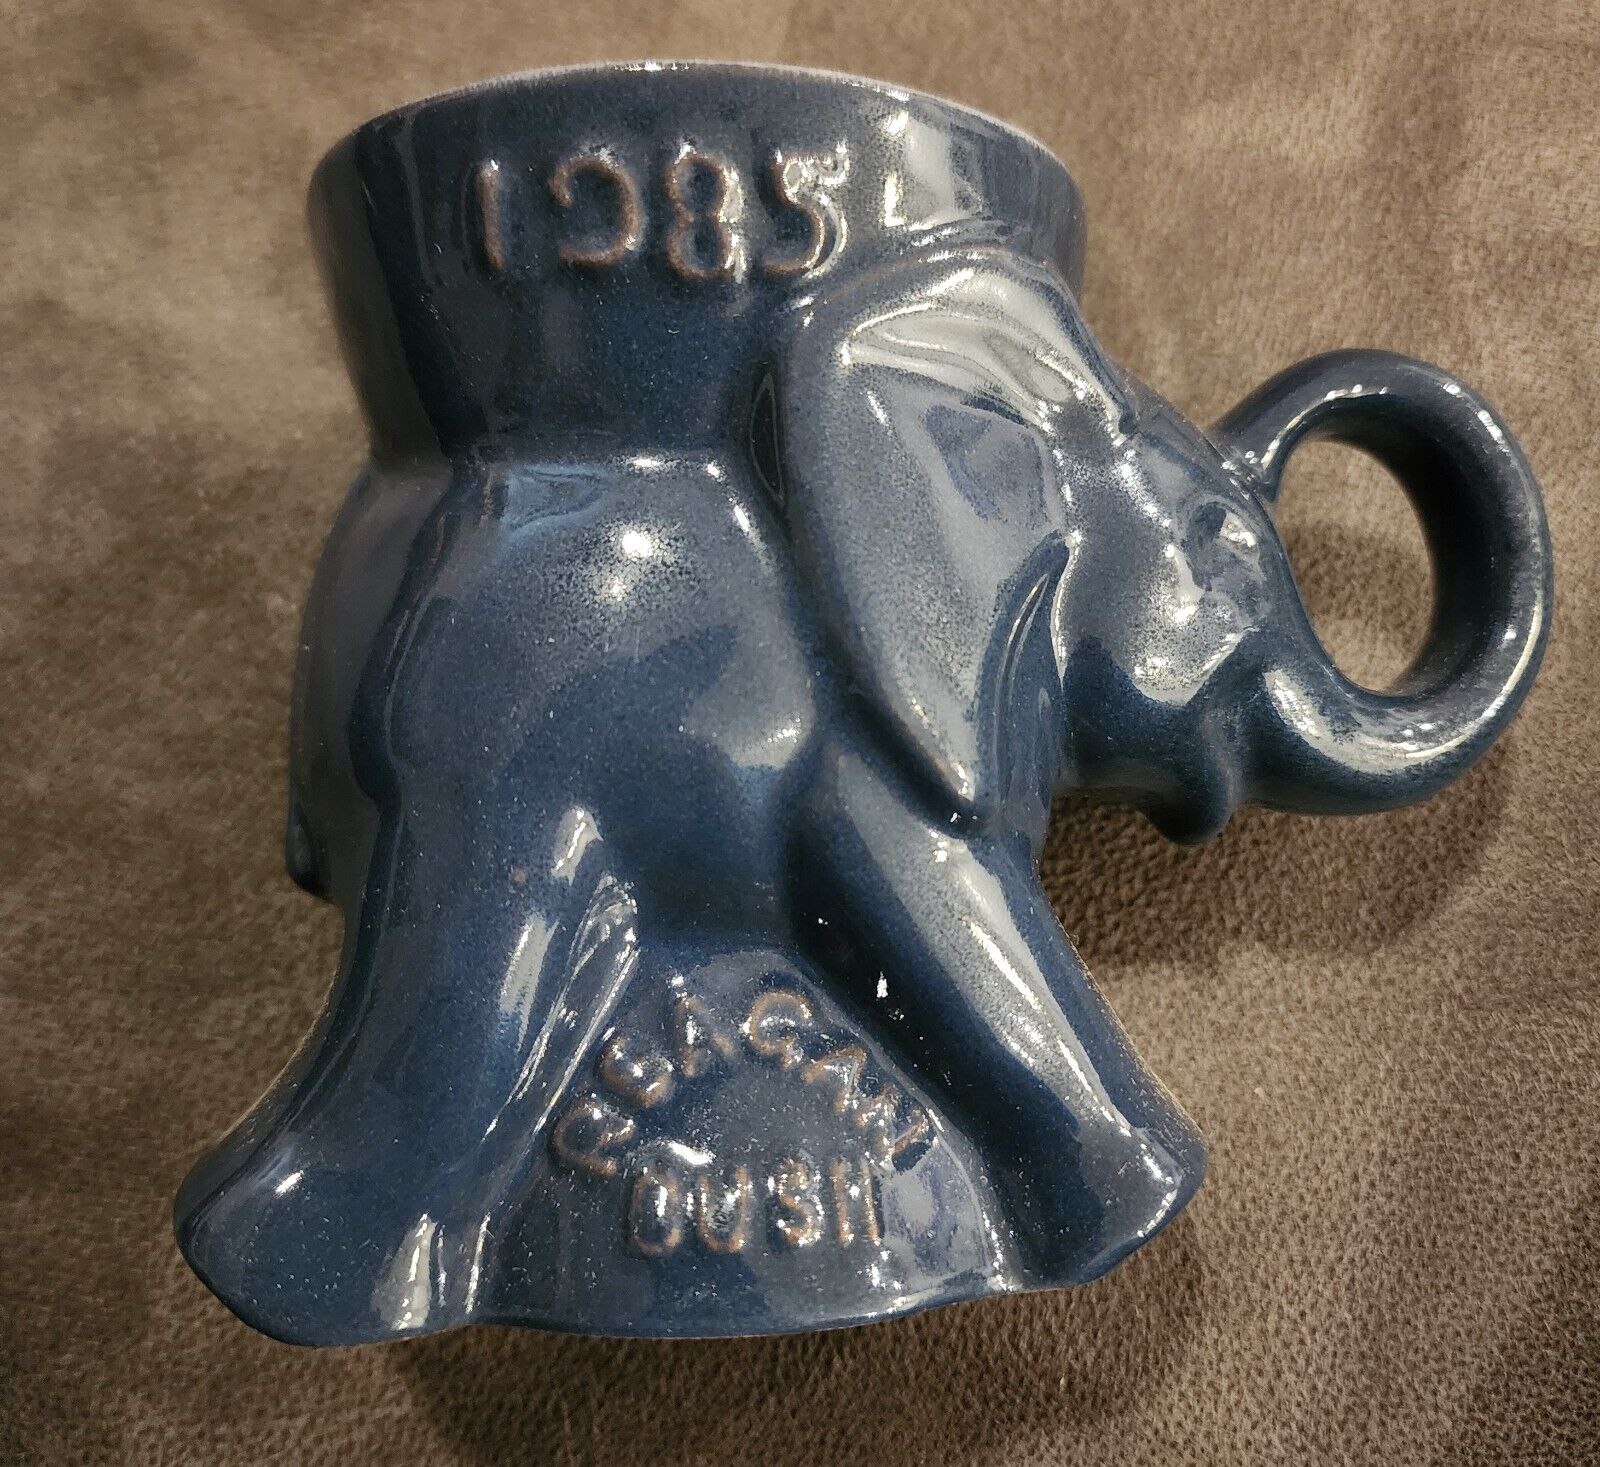 1985 Frankoma Pottery Mug - GOP Republican Elephant - Reagan/Bush Dark Blue